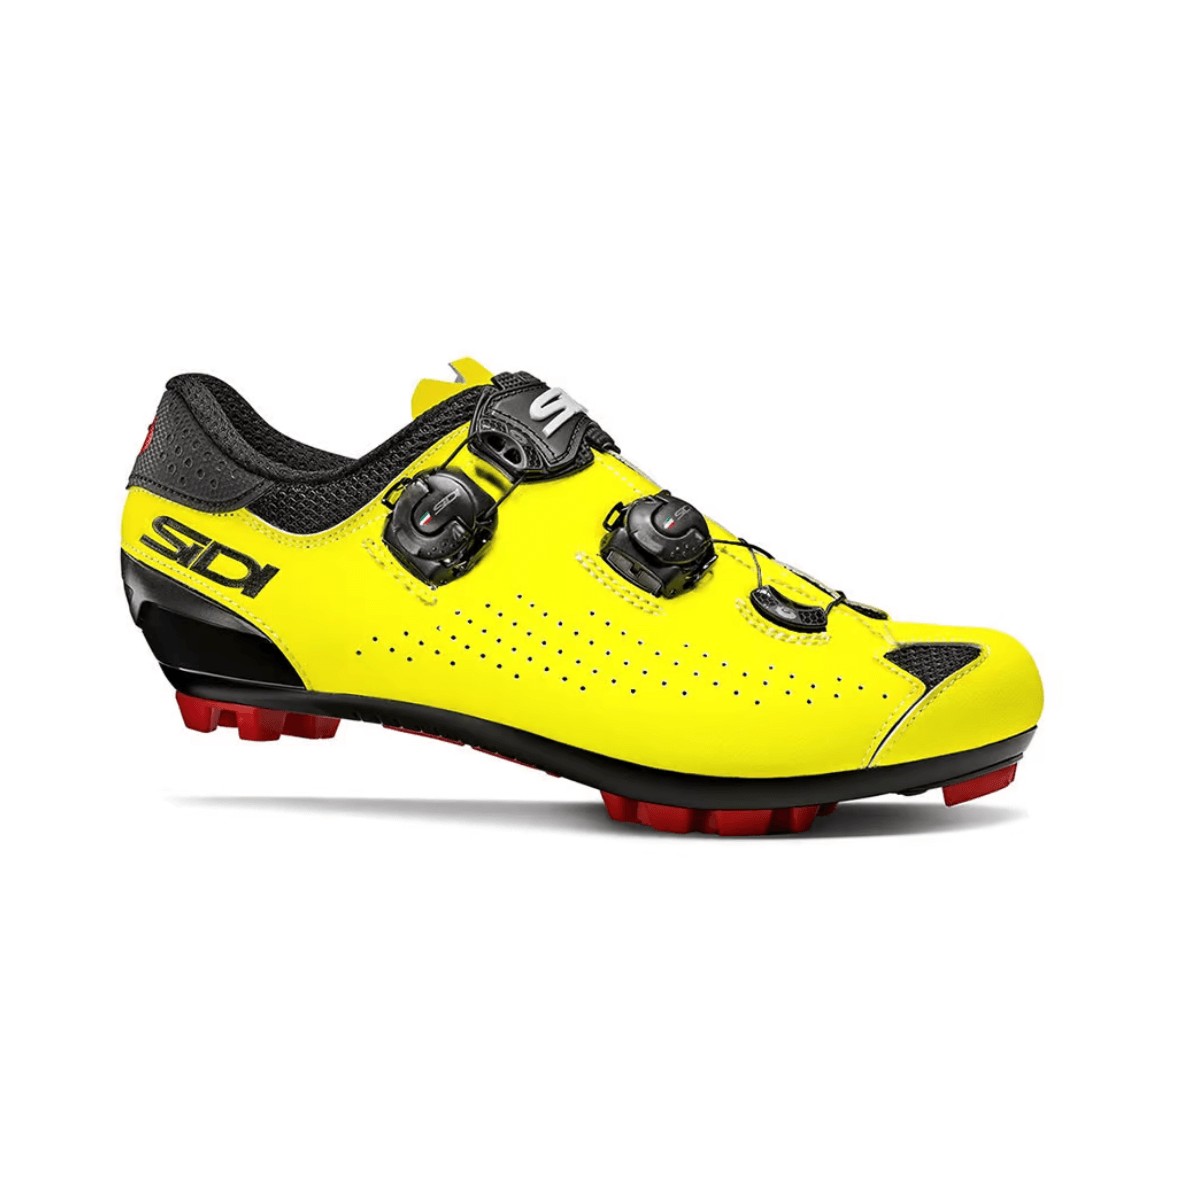 Sidi MTB Eagle 10 Shoes Yellow Black, Size 42 - EUR